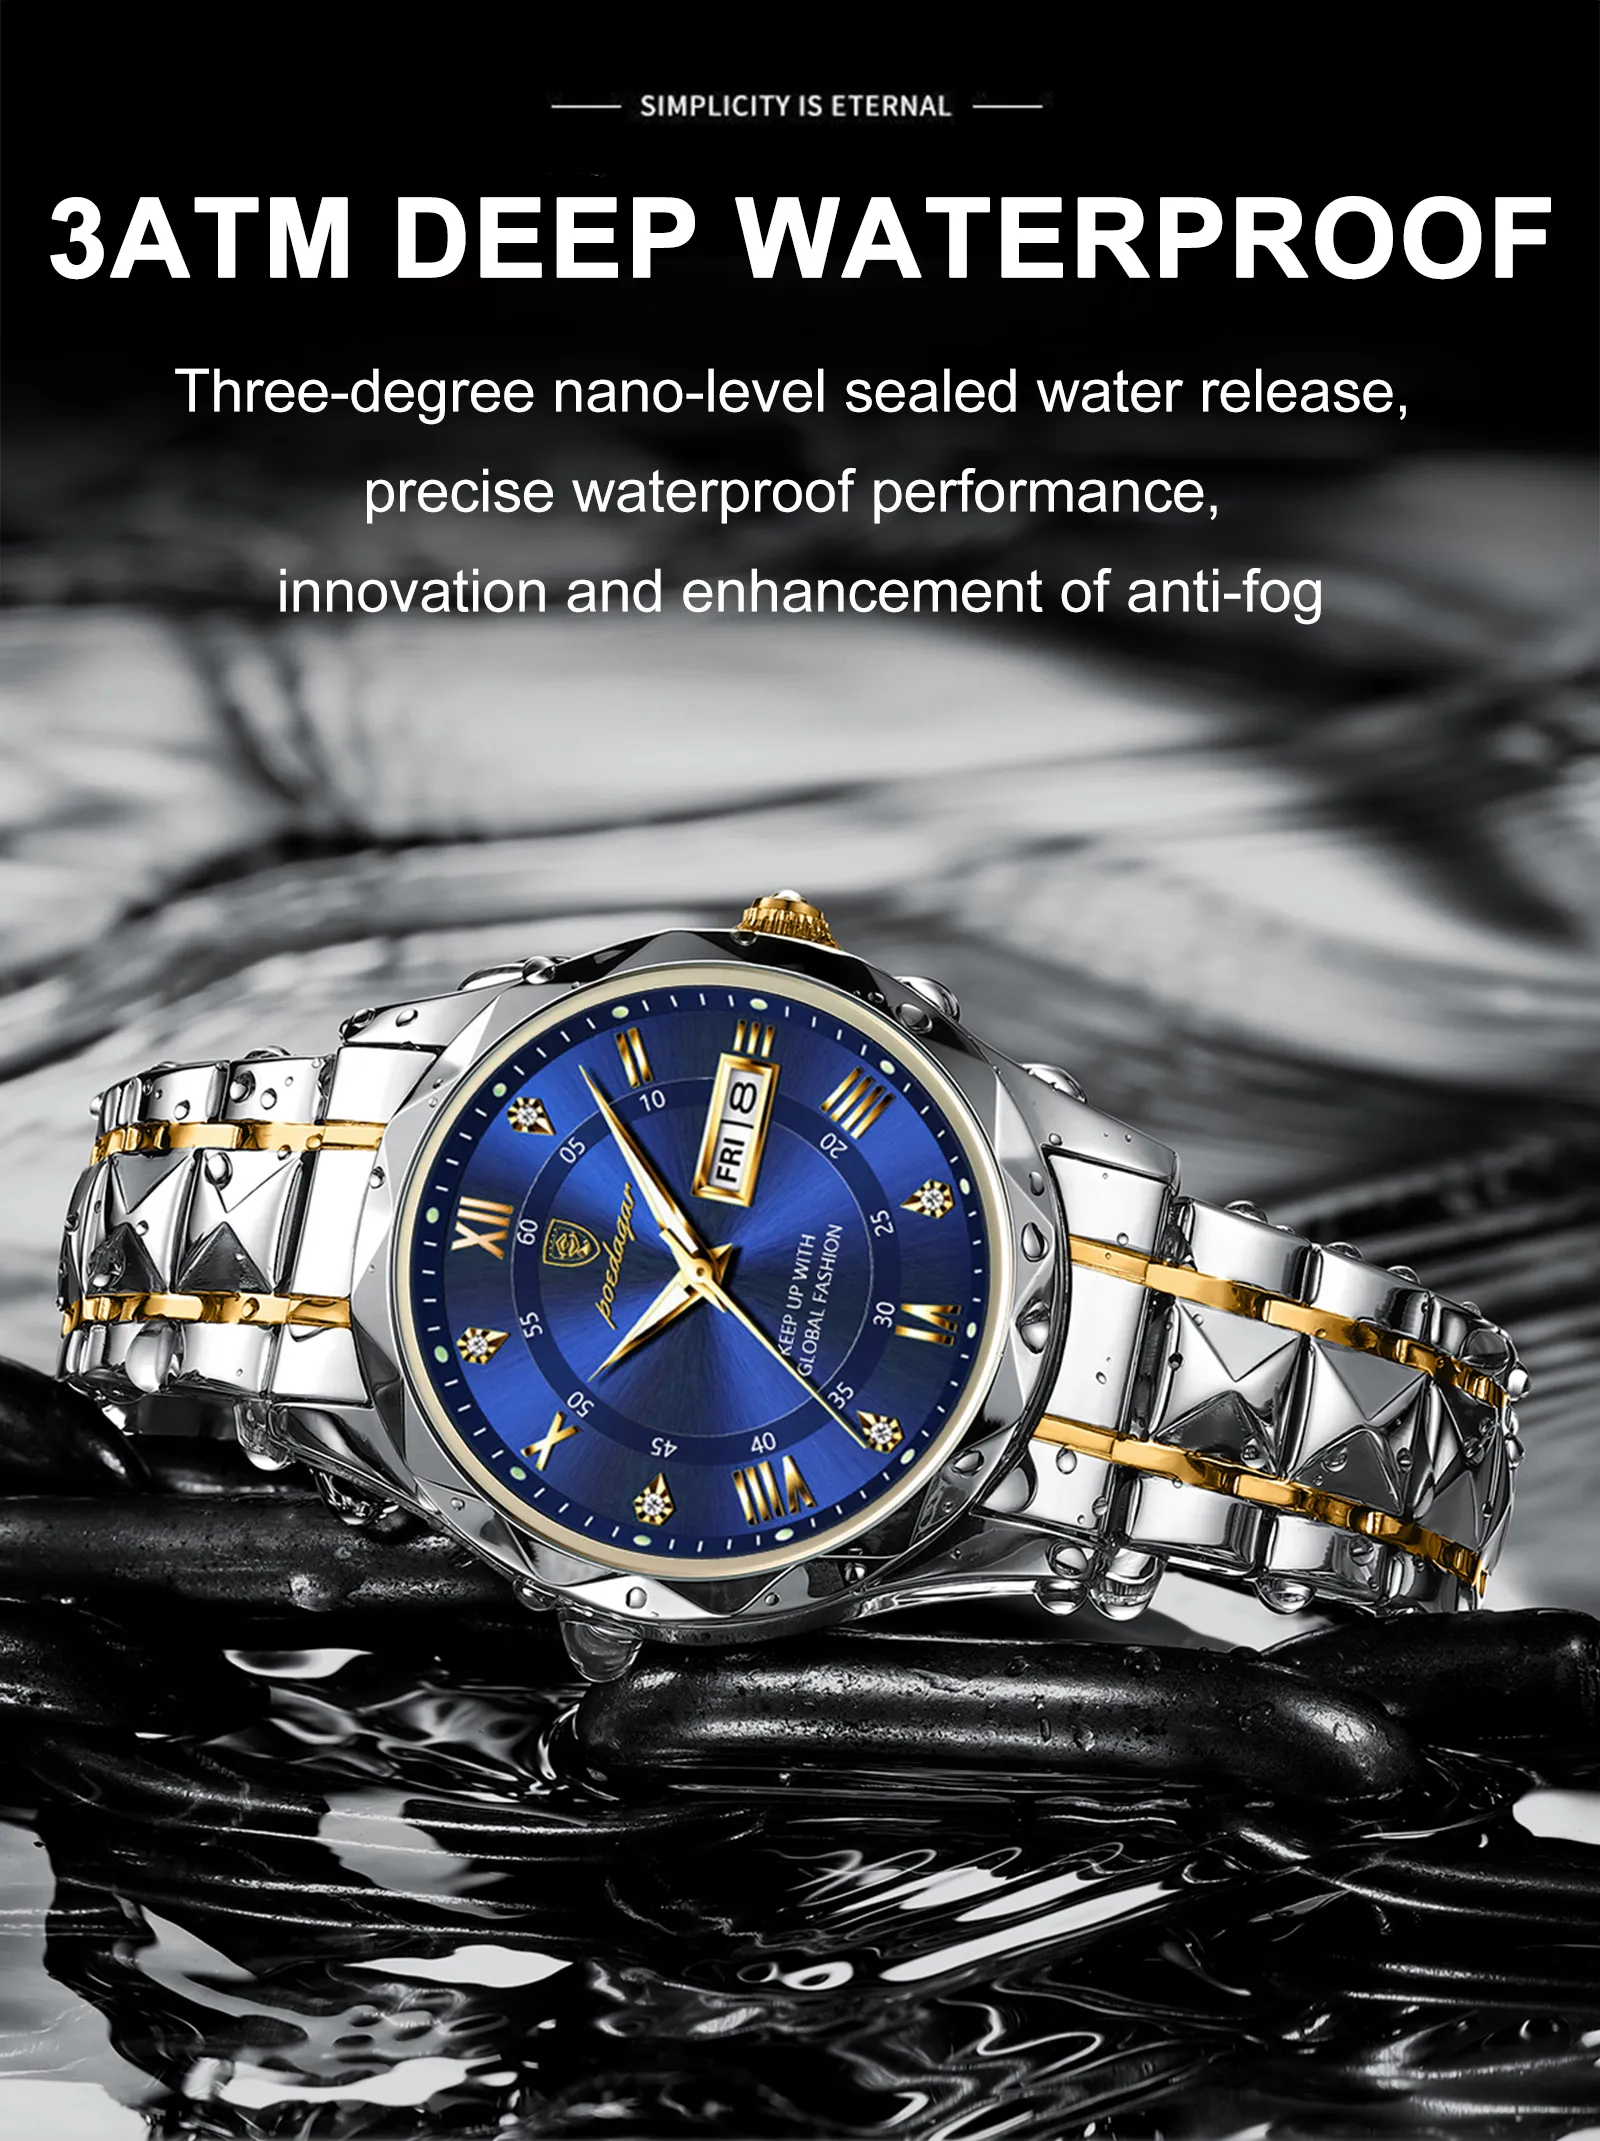 POEDAGAR Top Brand Luxury Man Wristwatch Waterproof